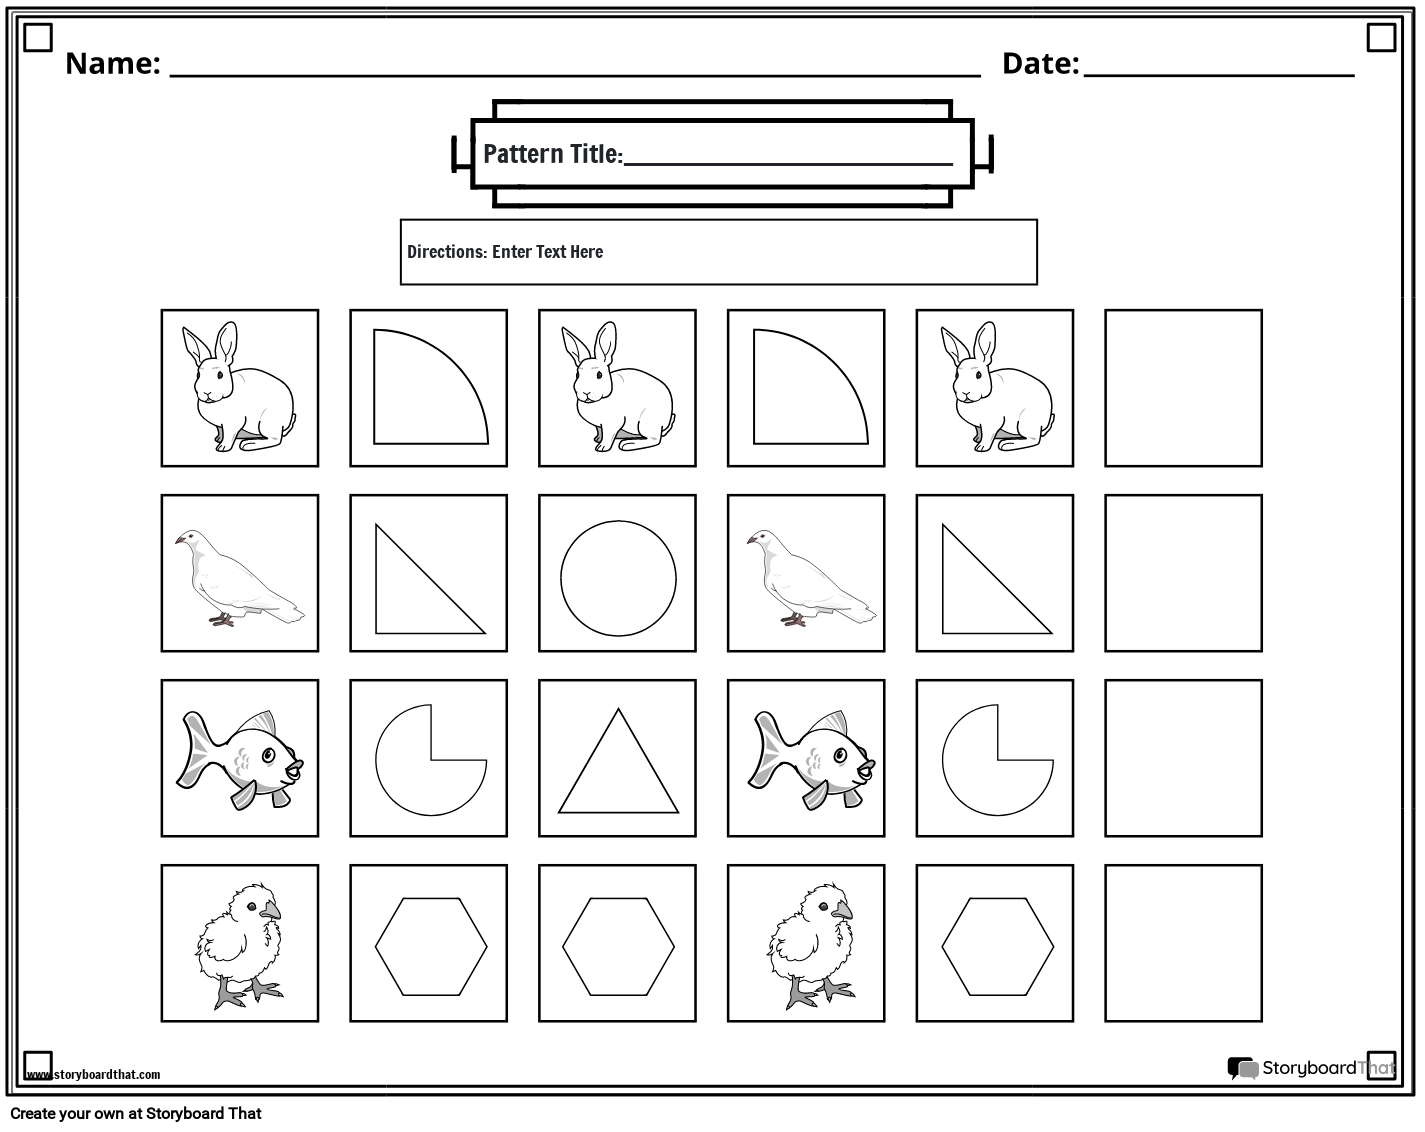 Animals & shapes pattern worksheet (black & white)